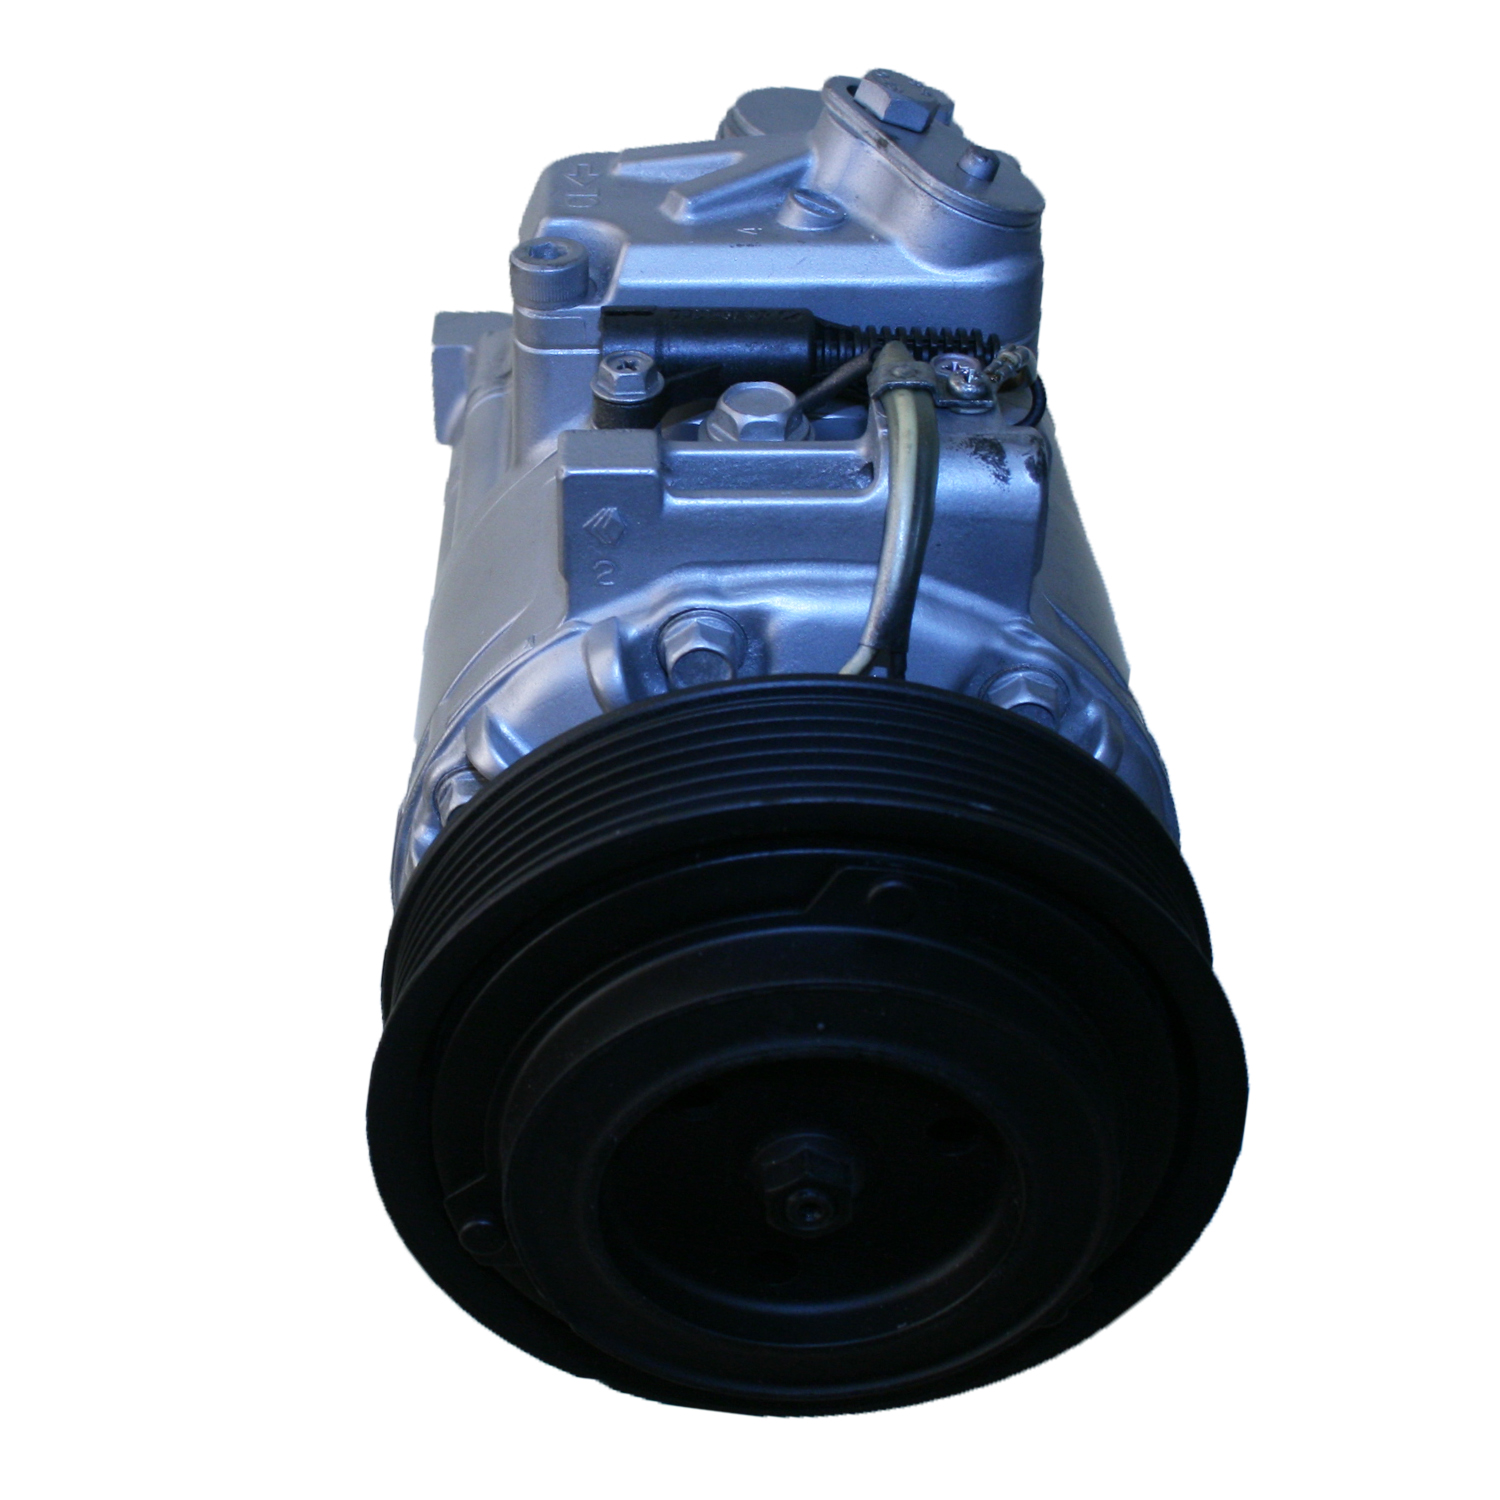 TCW Compressor 41250.6T1 Remanufactured Product Image field_60b6a13a6e67c